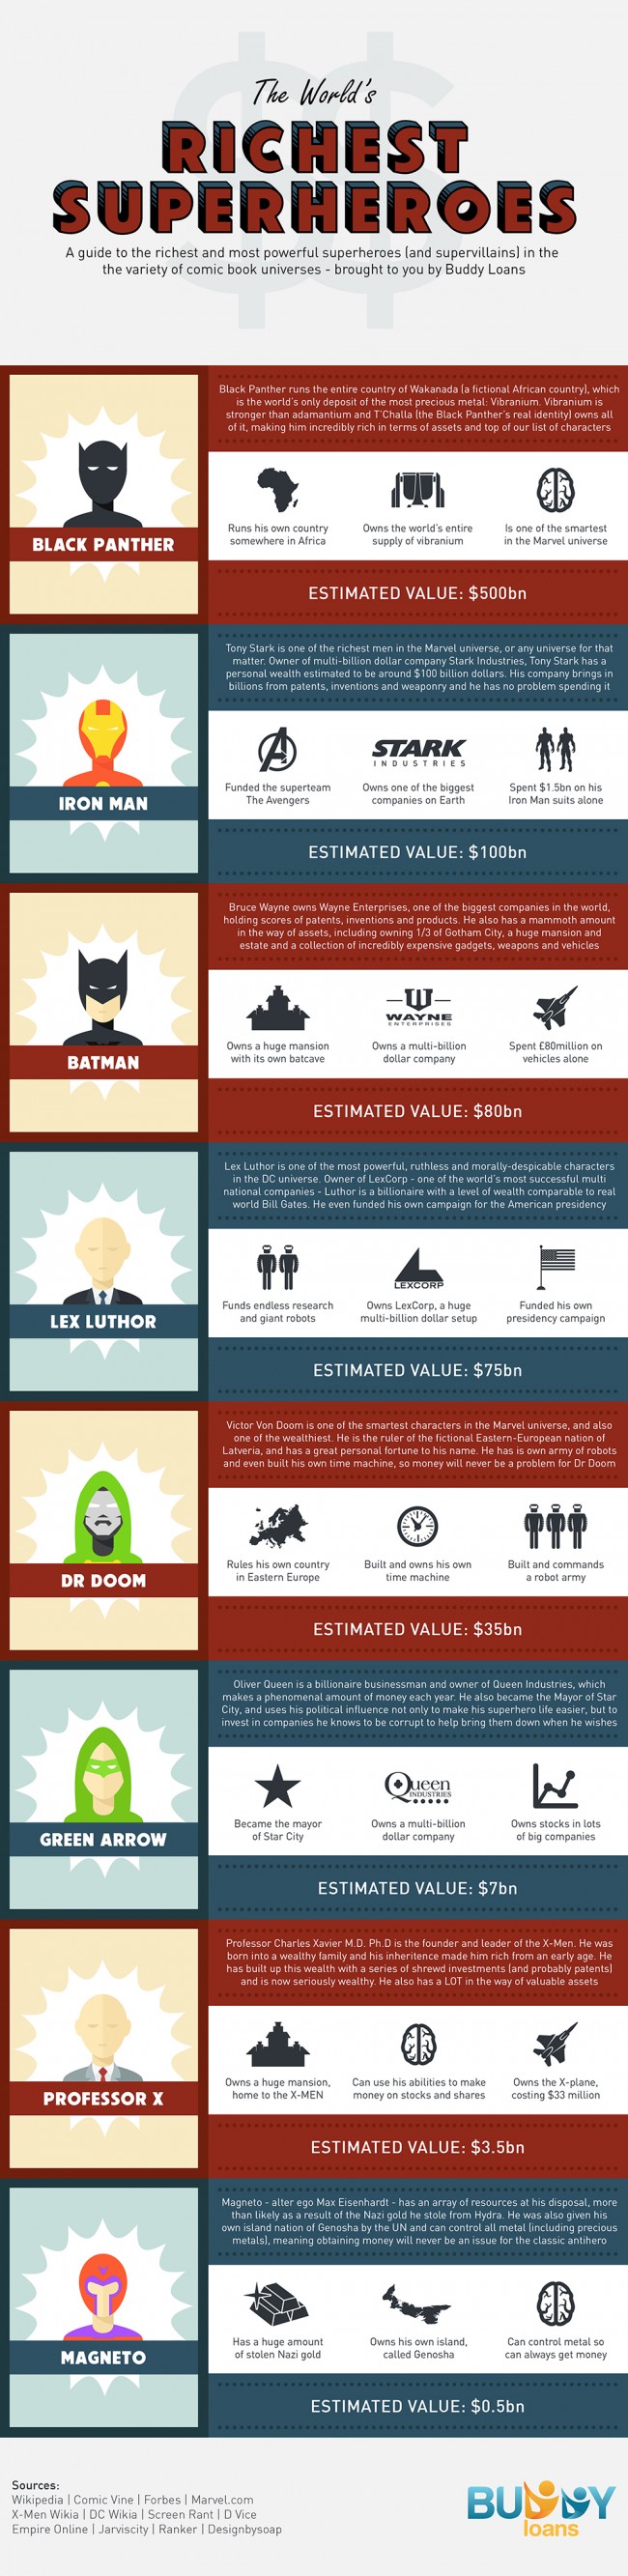 richest-superheroes-650x2666.jpg